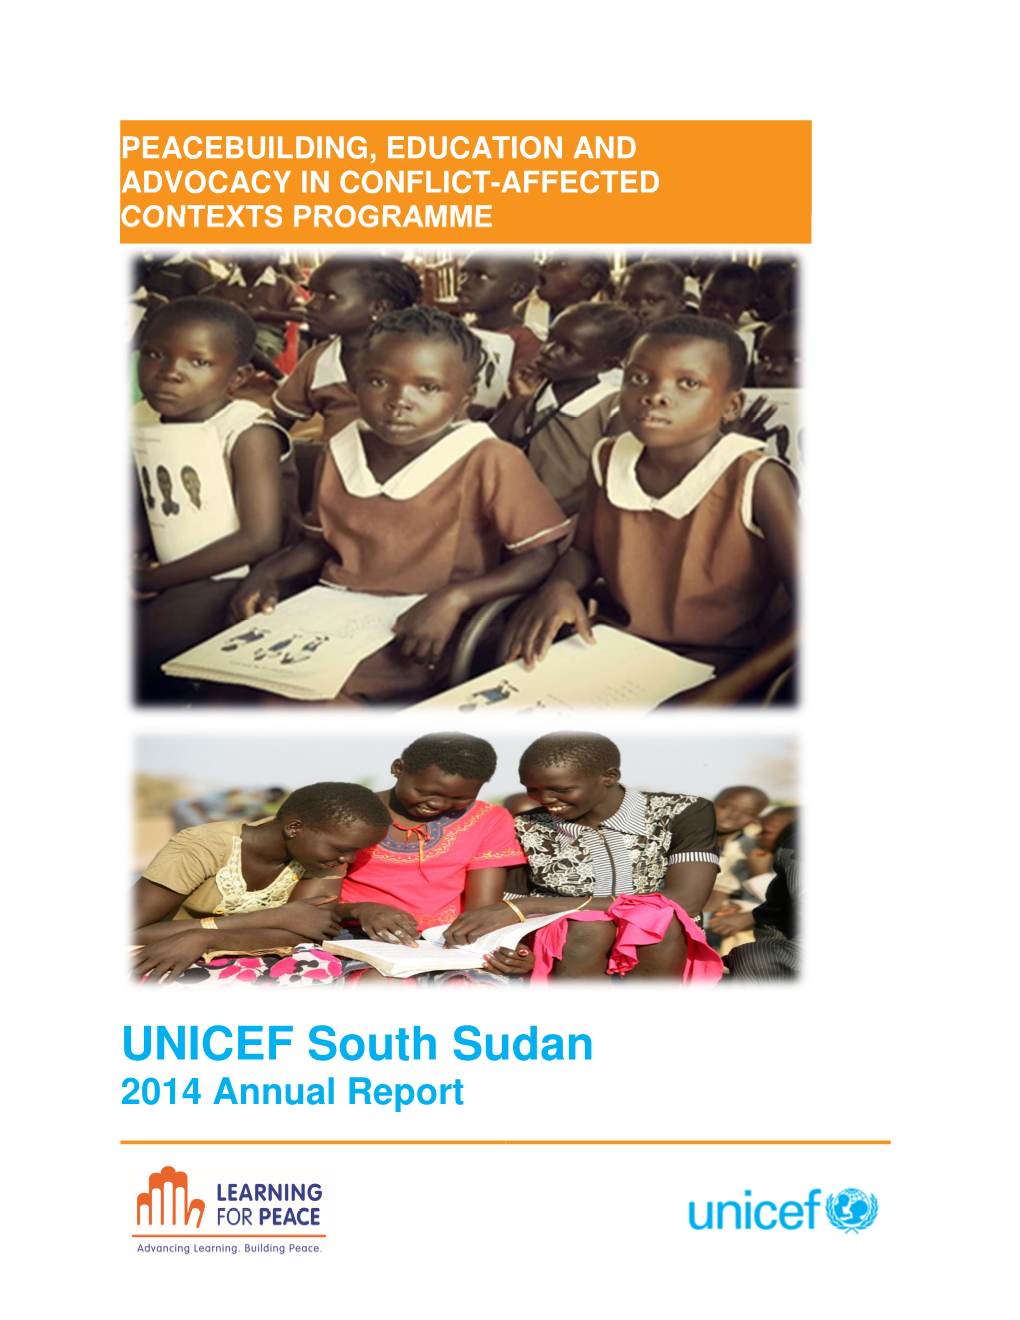 UNICEF South Sudan